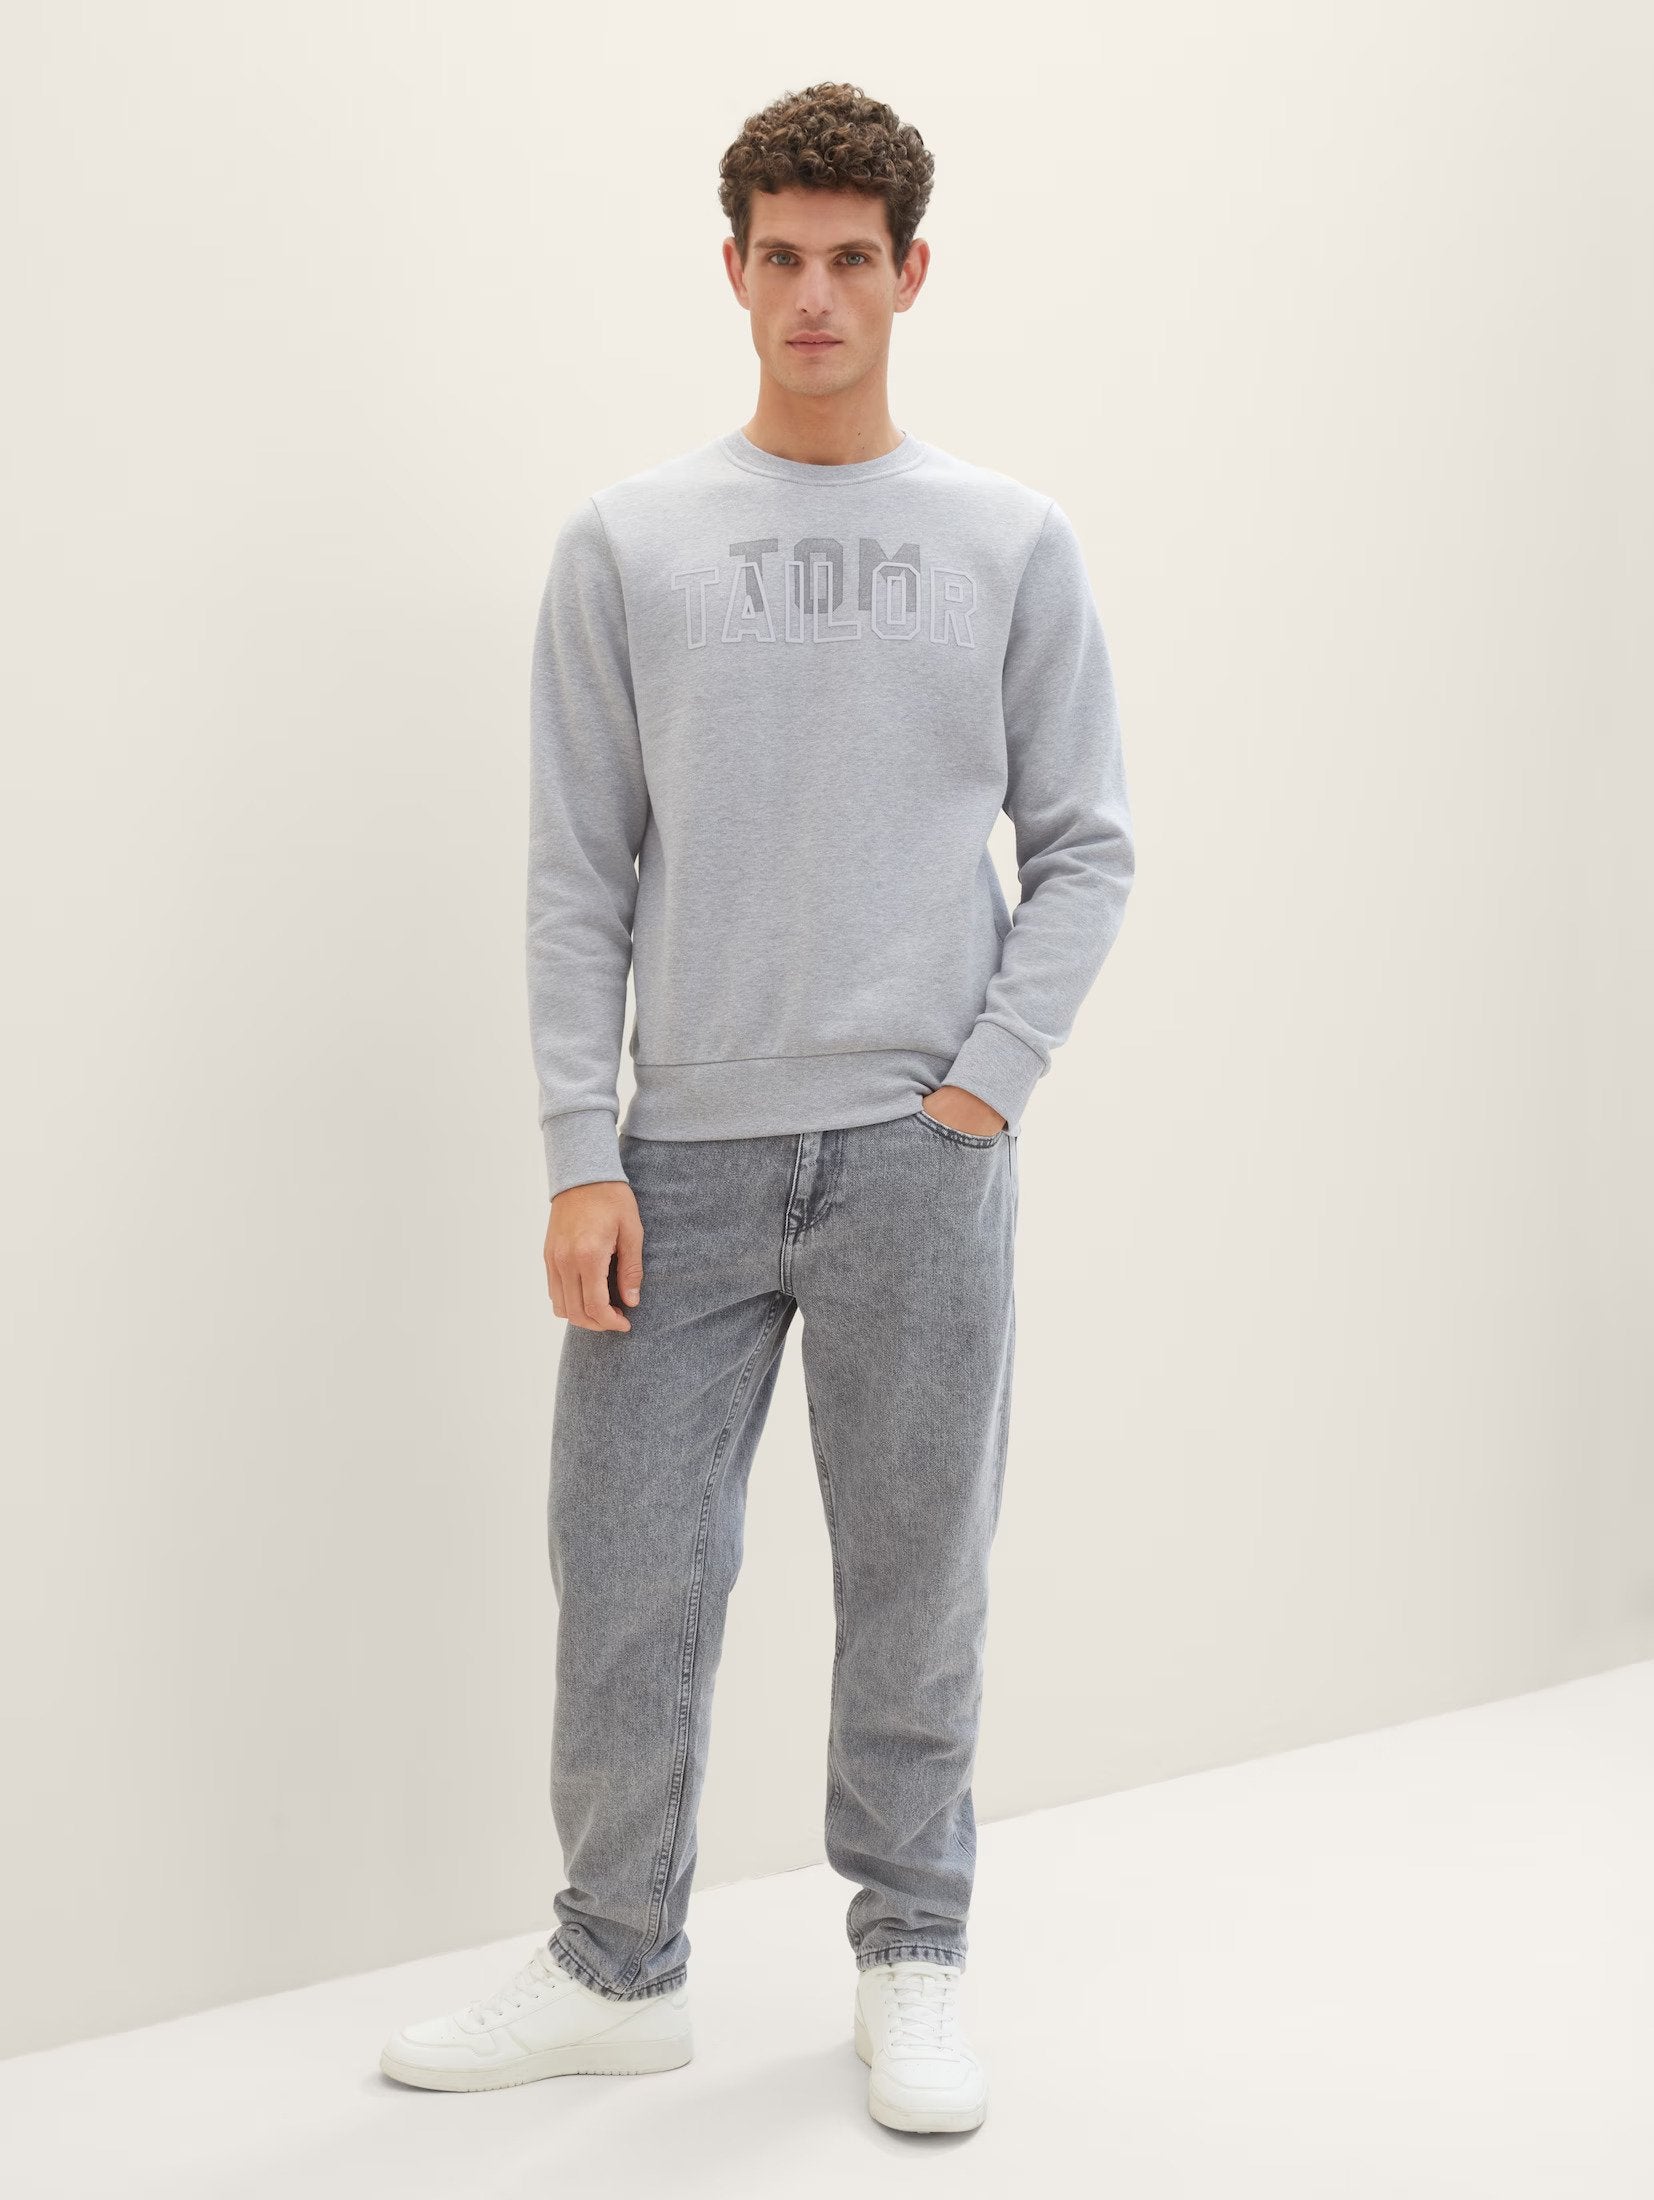 Tom Tailor Printed Grey Sweater